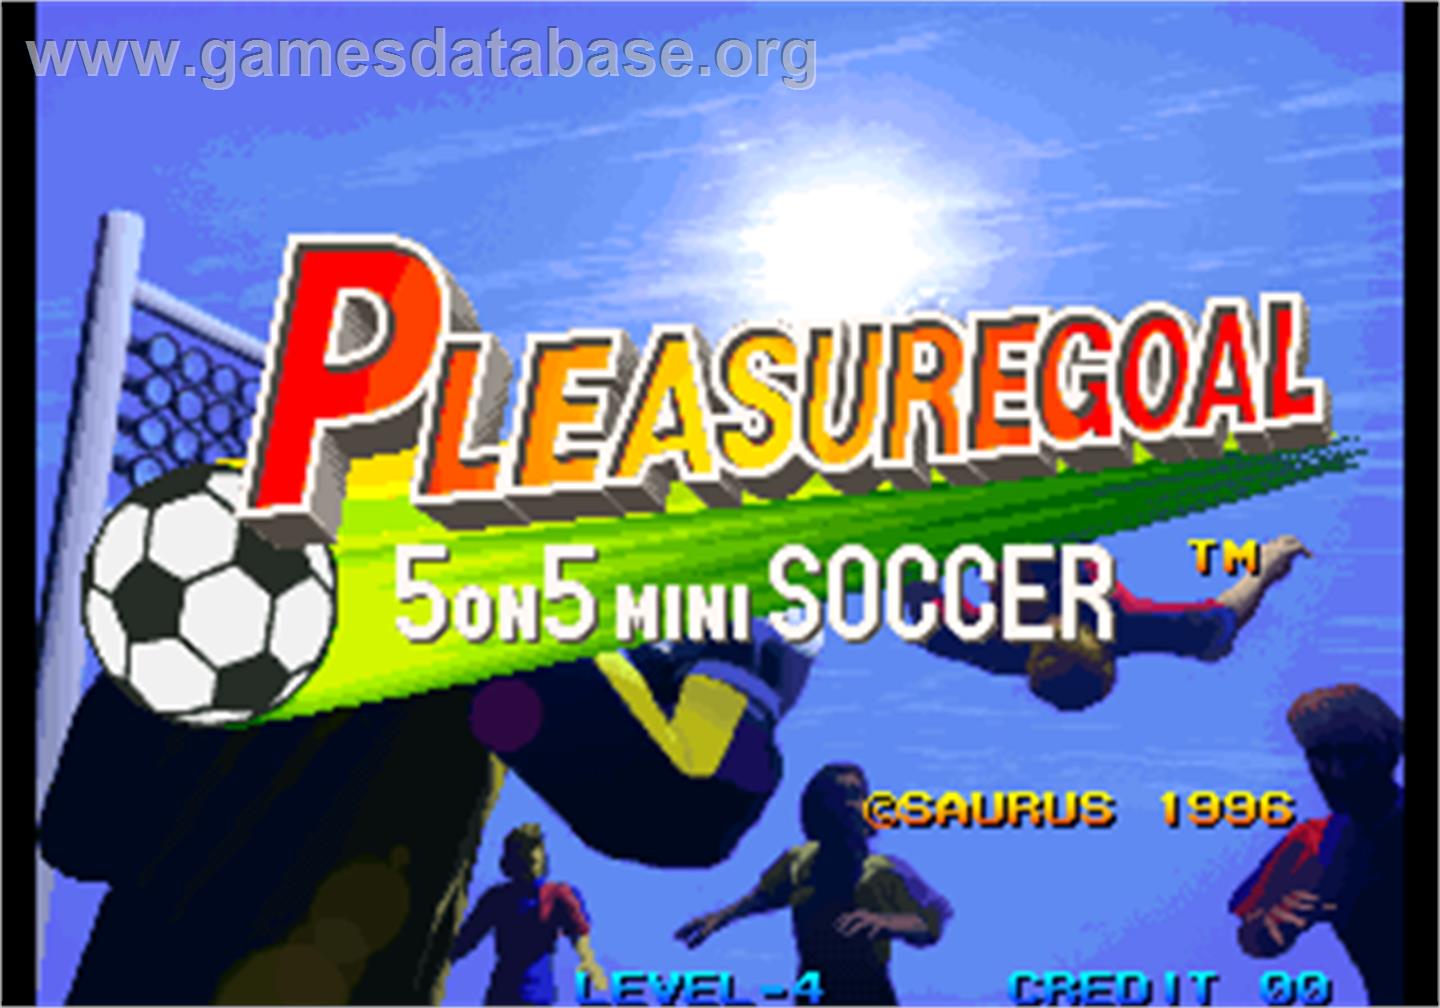 Pleasure Goal / Futsal - 5 on 5 Mini Soccer - Arcade - Artwork - Title Screen